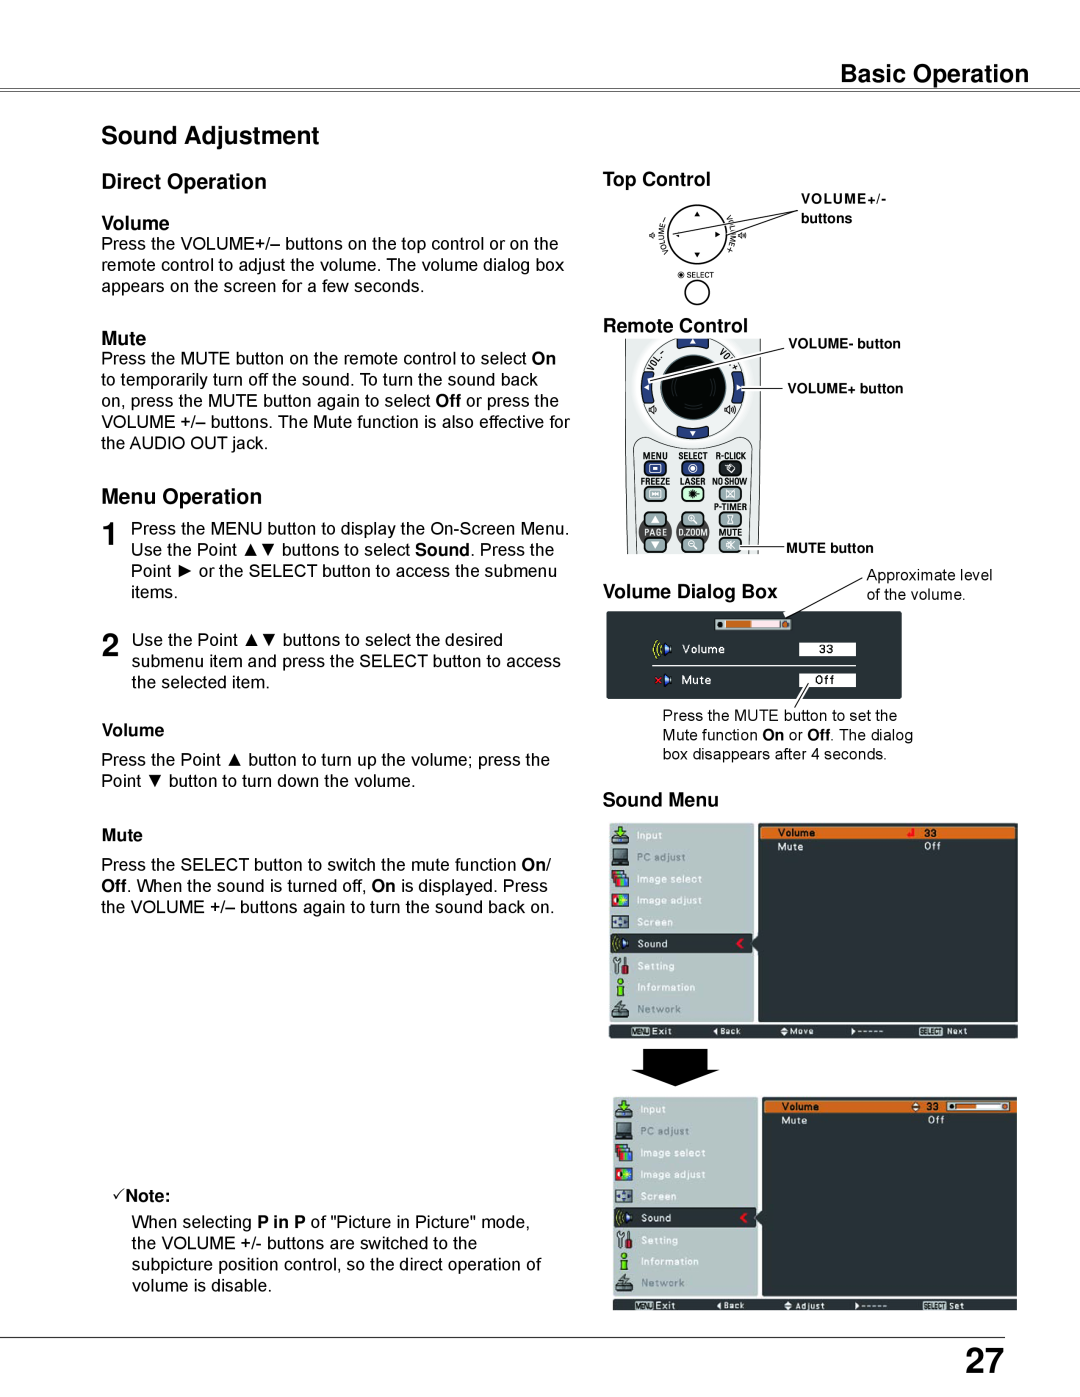 Sanyo PLC-WXU700 Sound Adjustment, Direct Operation, Menu Operation, Mute, Volume Dialog Box, Sound Menu, Top Control 